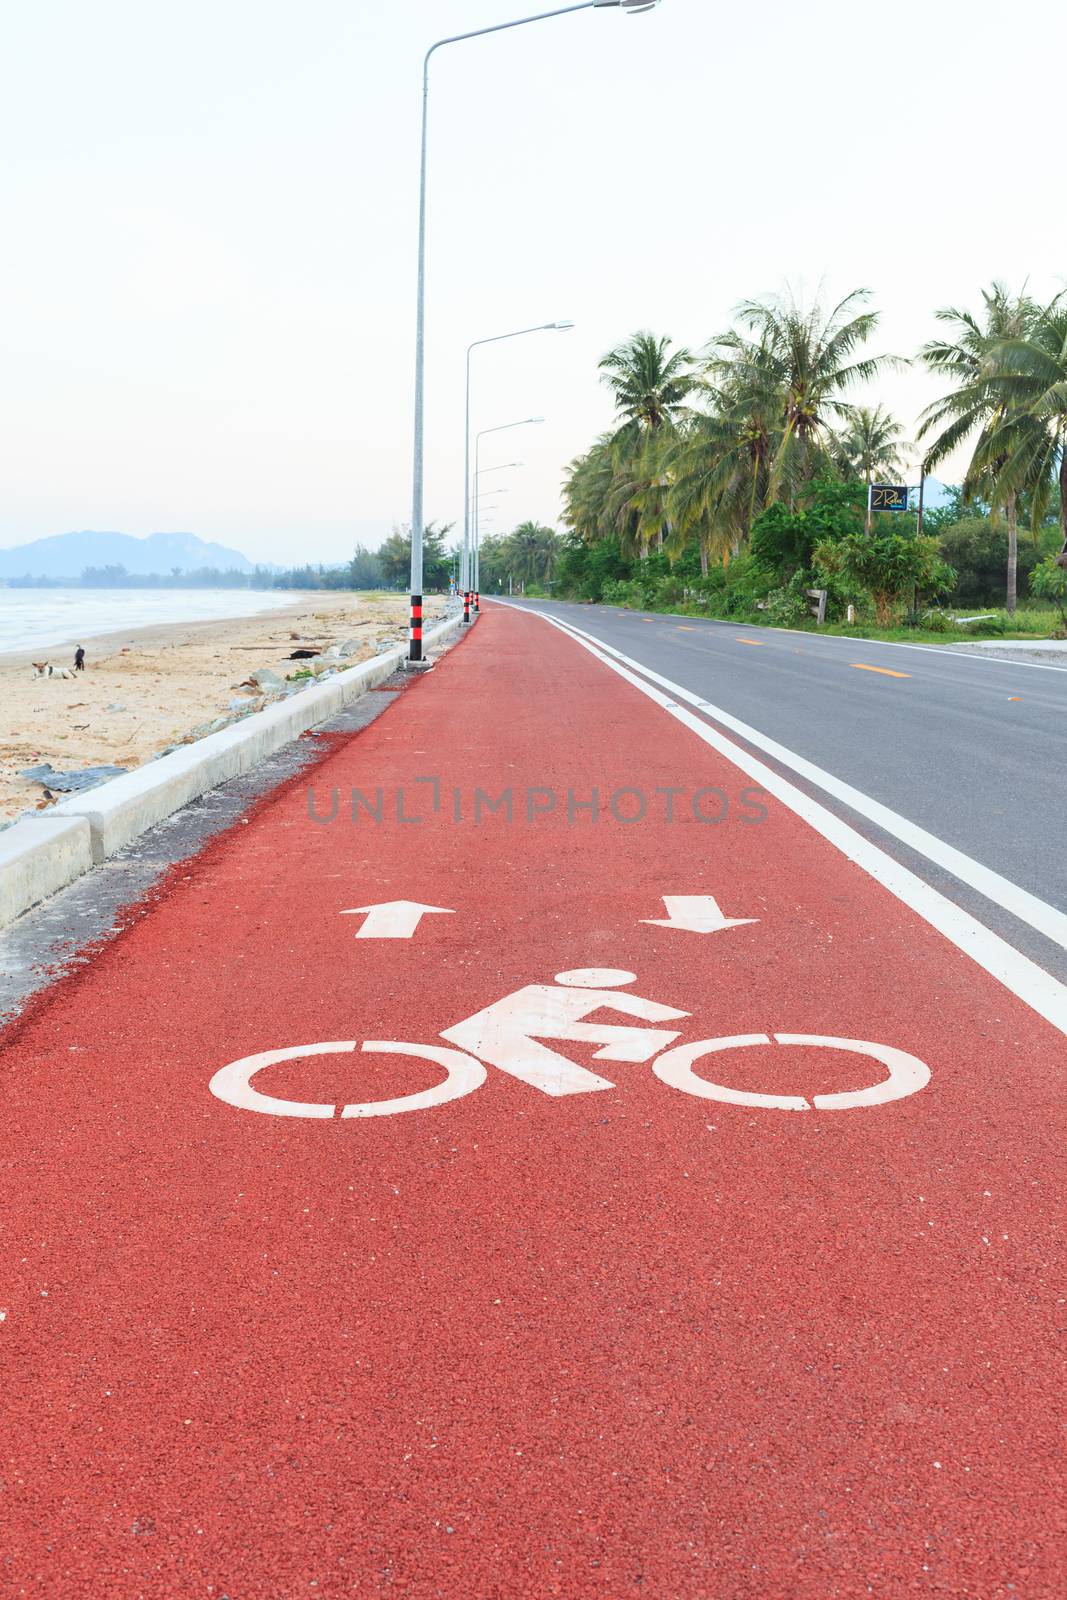 Bicycle lane or path, icon symbol on red asphalt road by FrameAngel